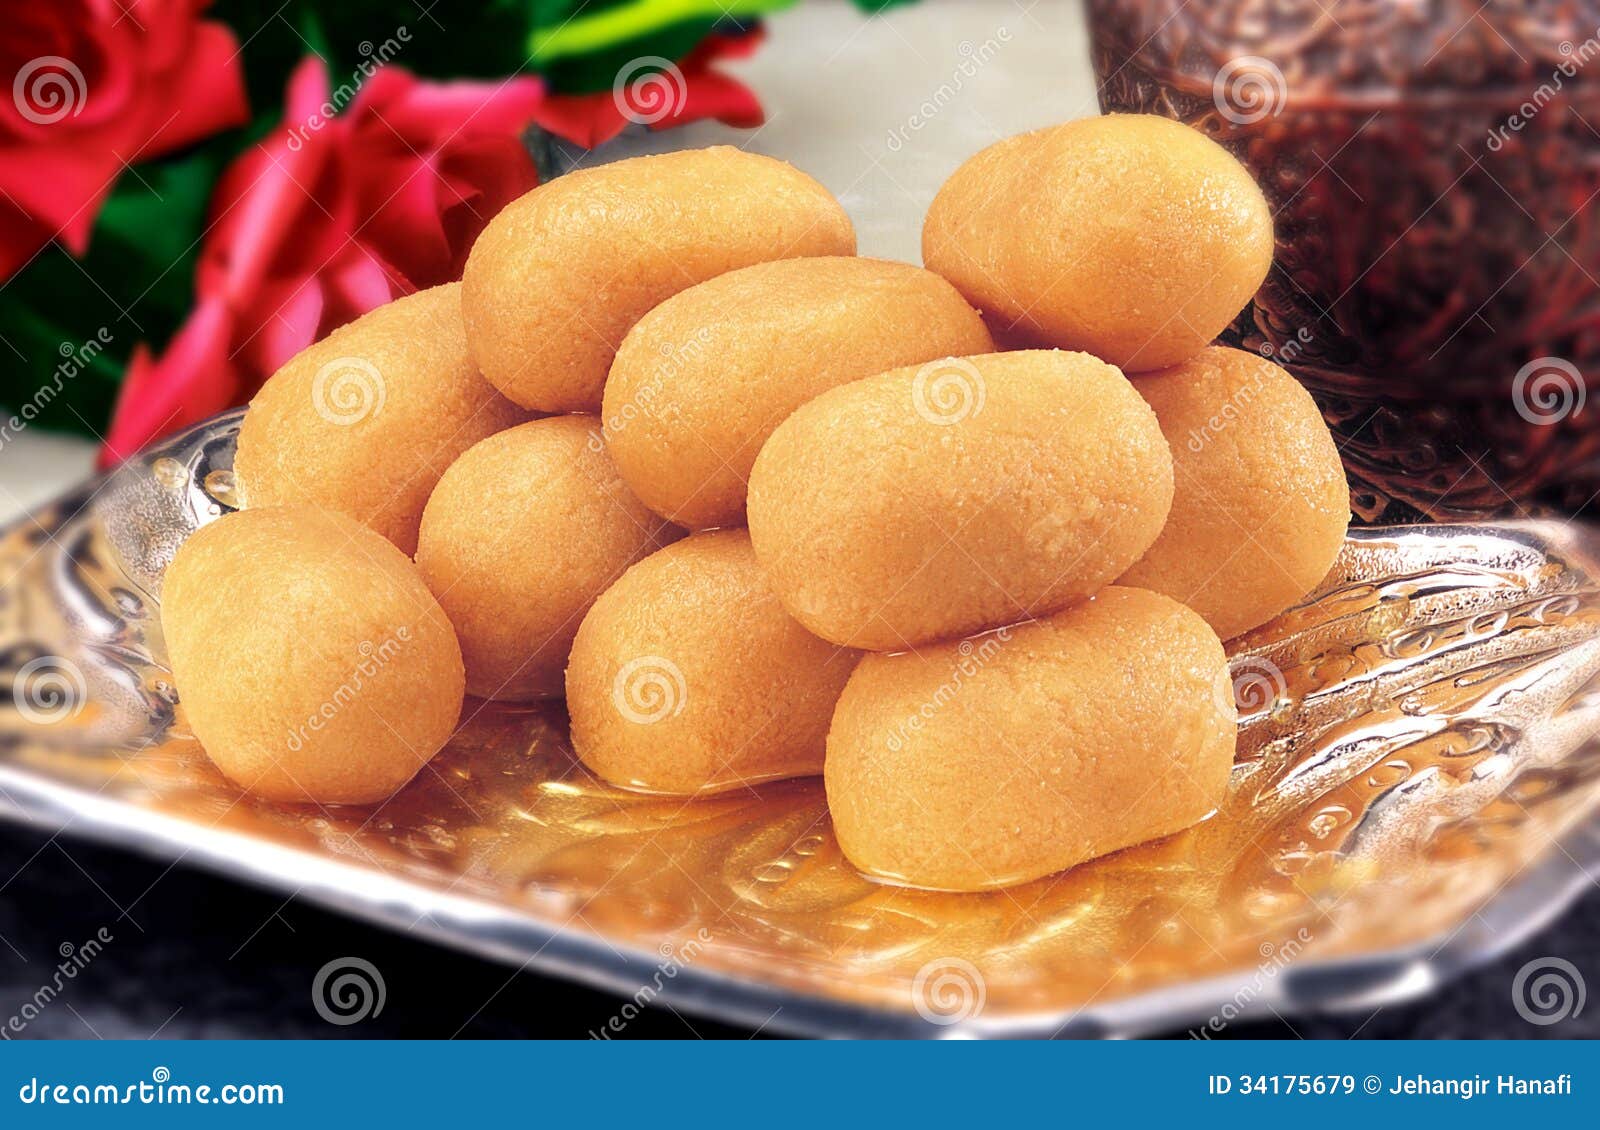 bengali-chumchum-scrumptious-sweet-bengal-favourite-dish-34175679.jpg